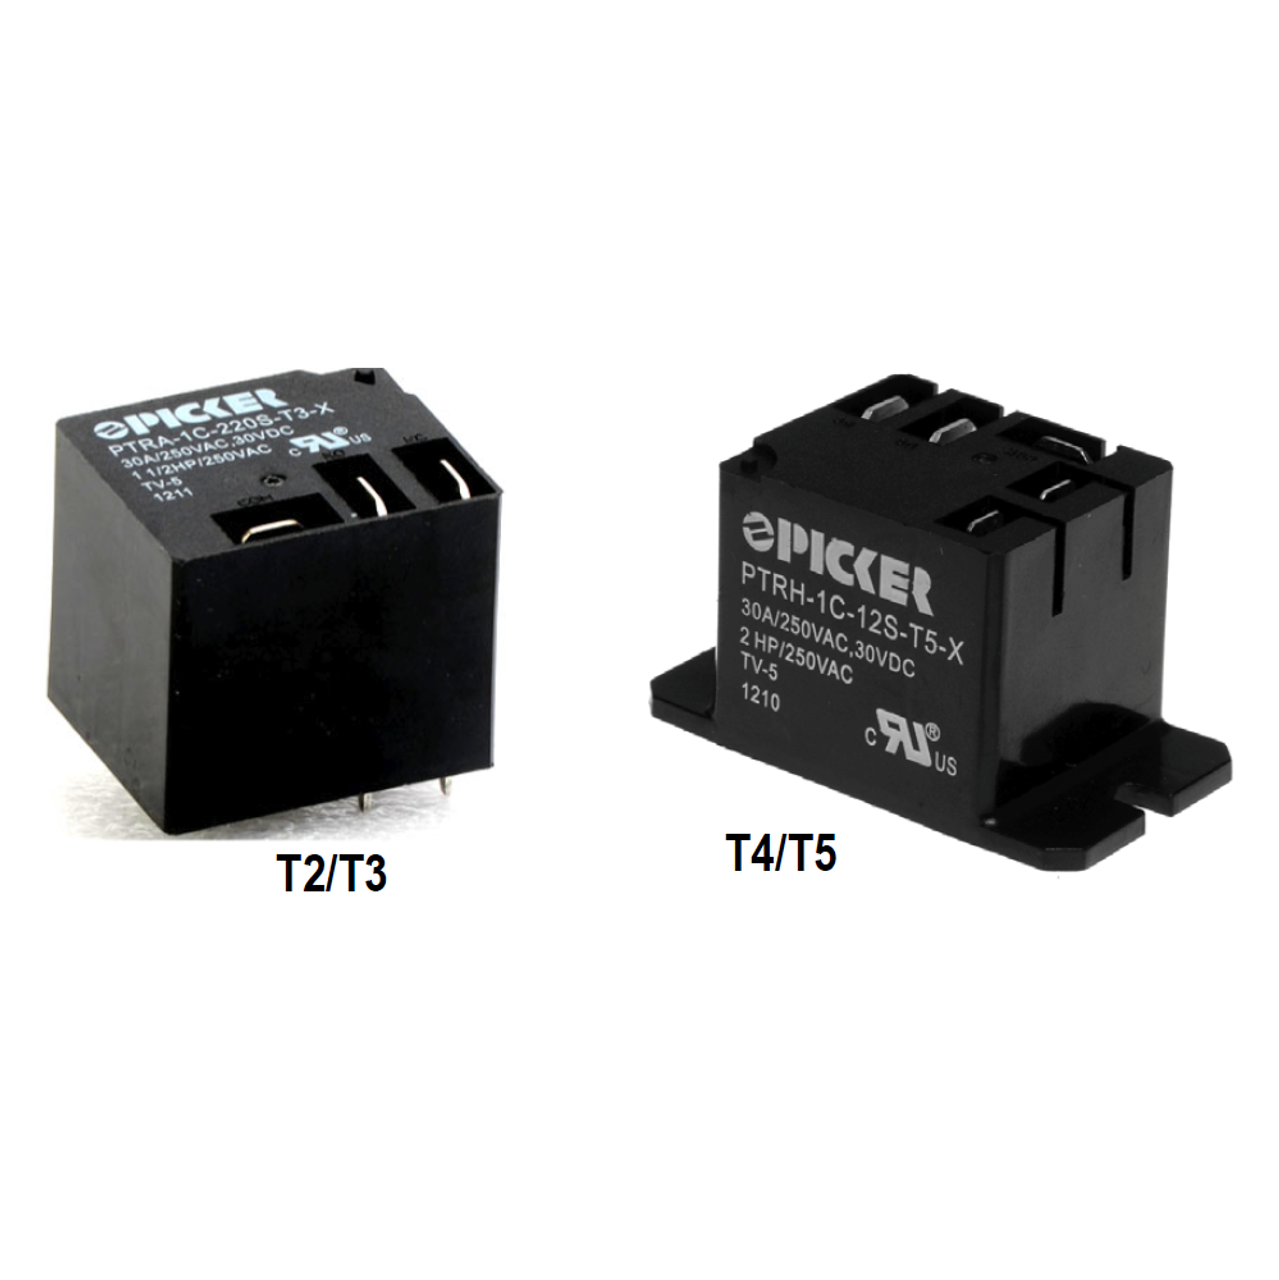 Picker PTRH-1C-110SF-T3-X67A0.6G Power Relays